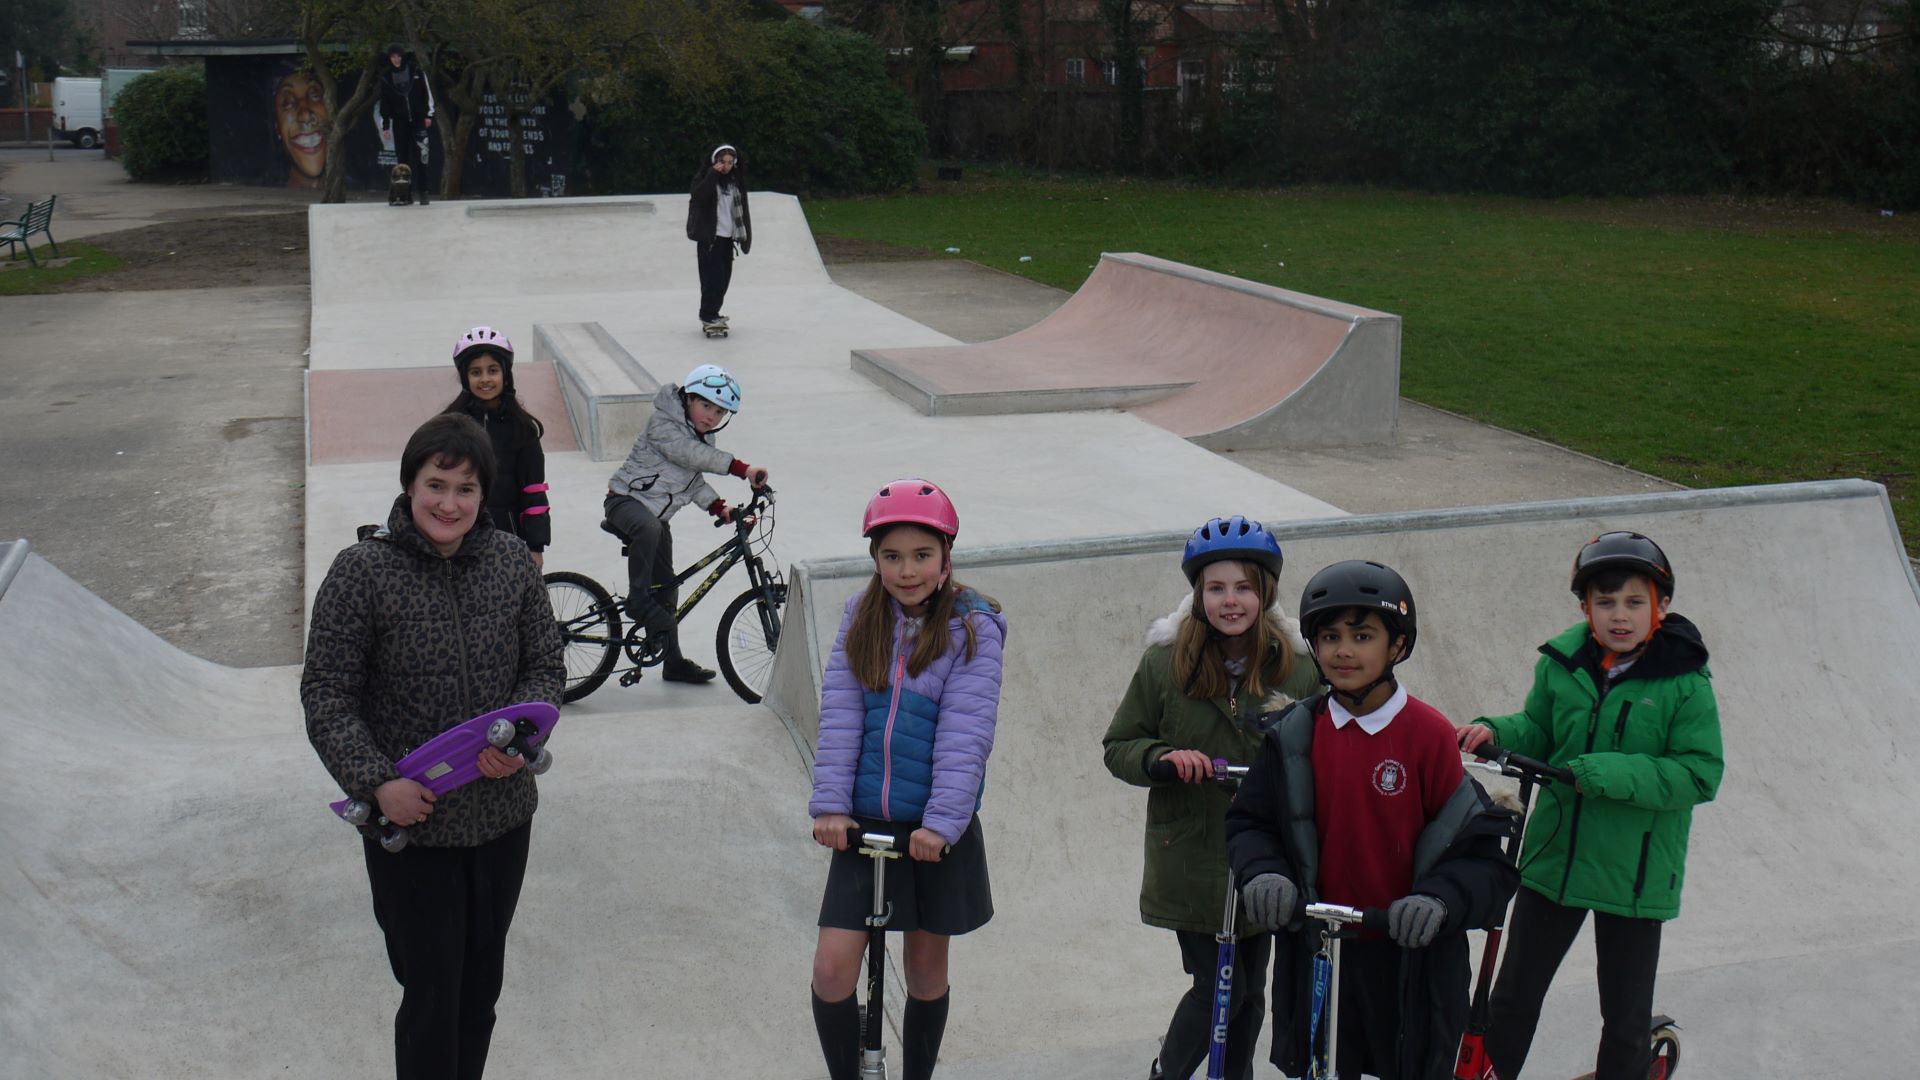 New skatepark opens in Gatley 